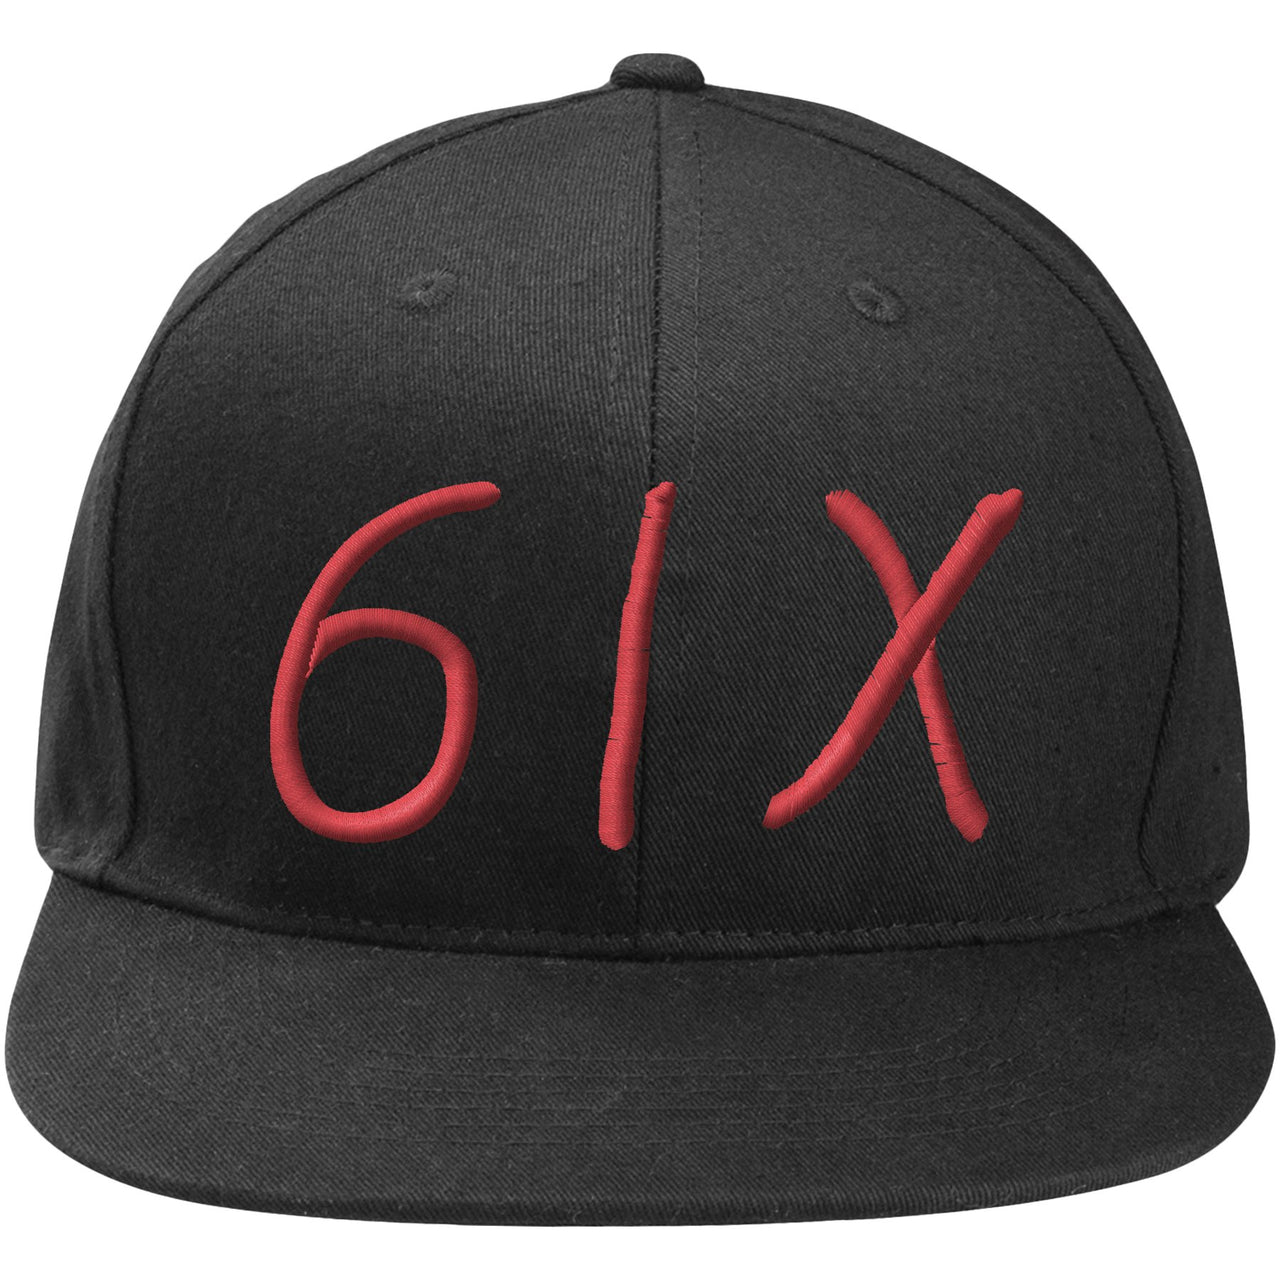 Infrared 6s Snapback Hat | 6ix, Black